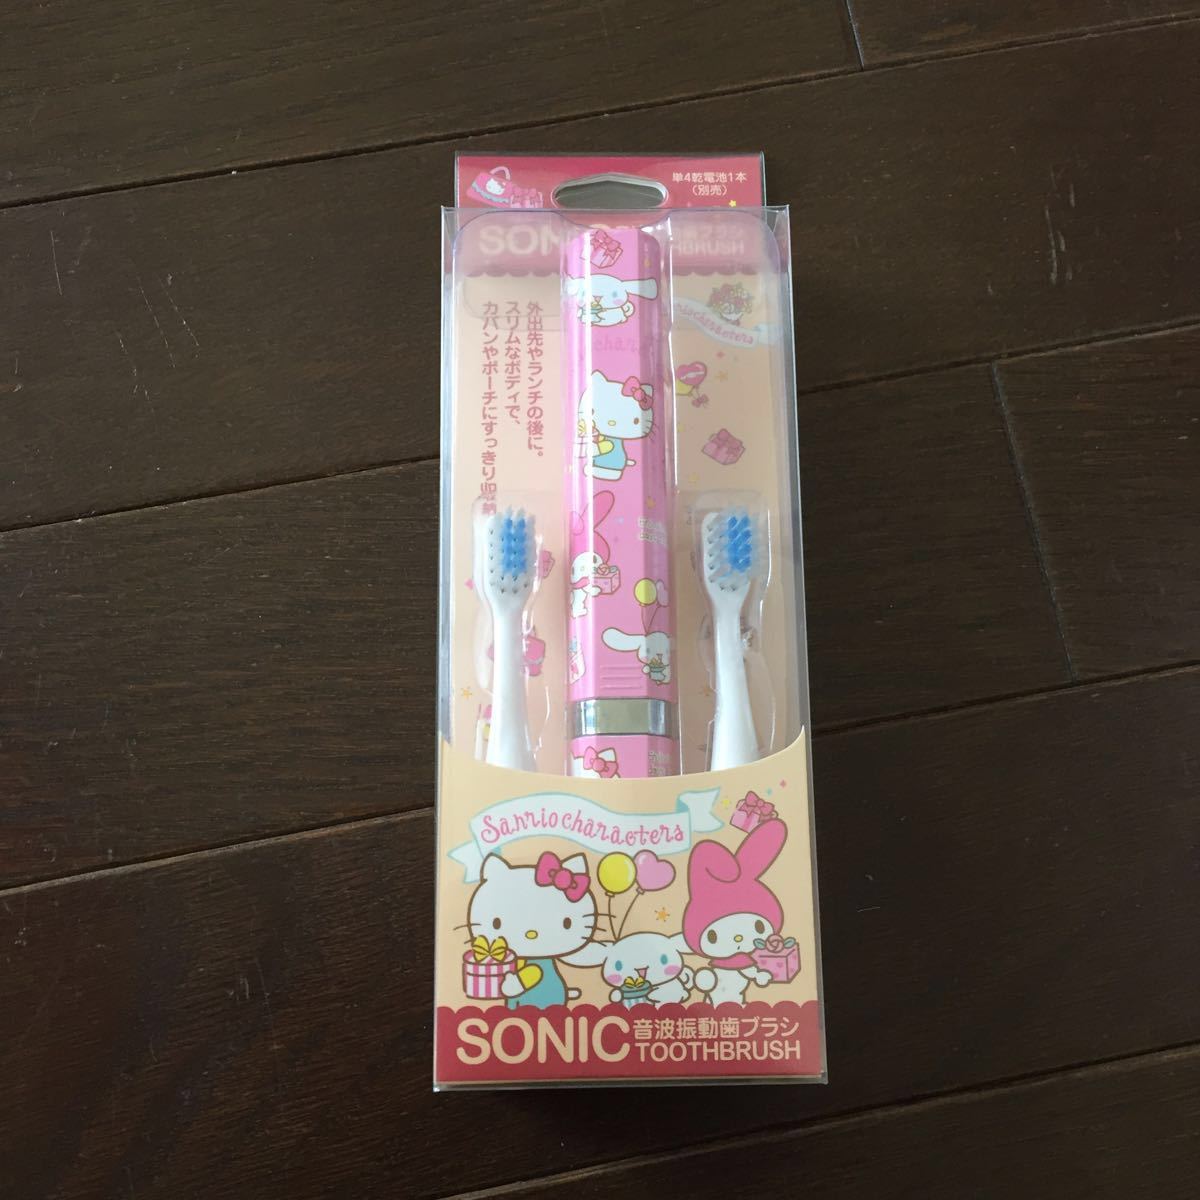  Sanrio аукстический колебание зубная щетка Kitty мой mero